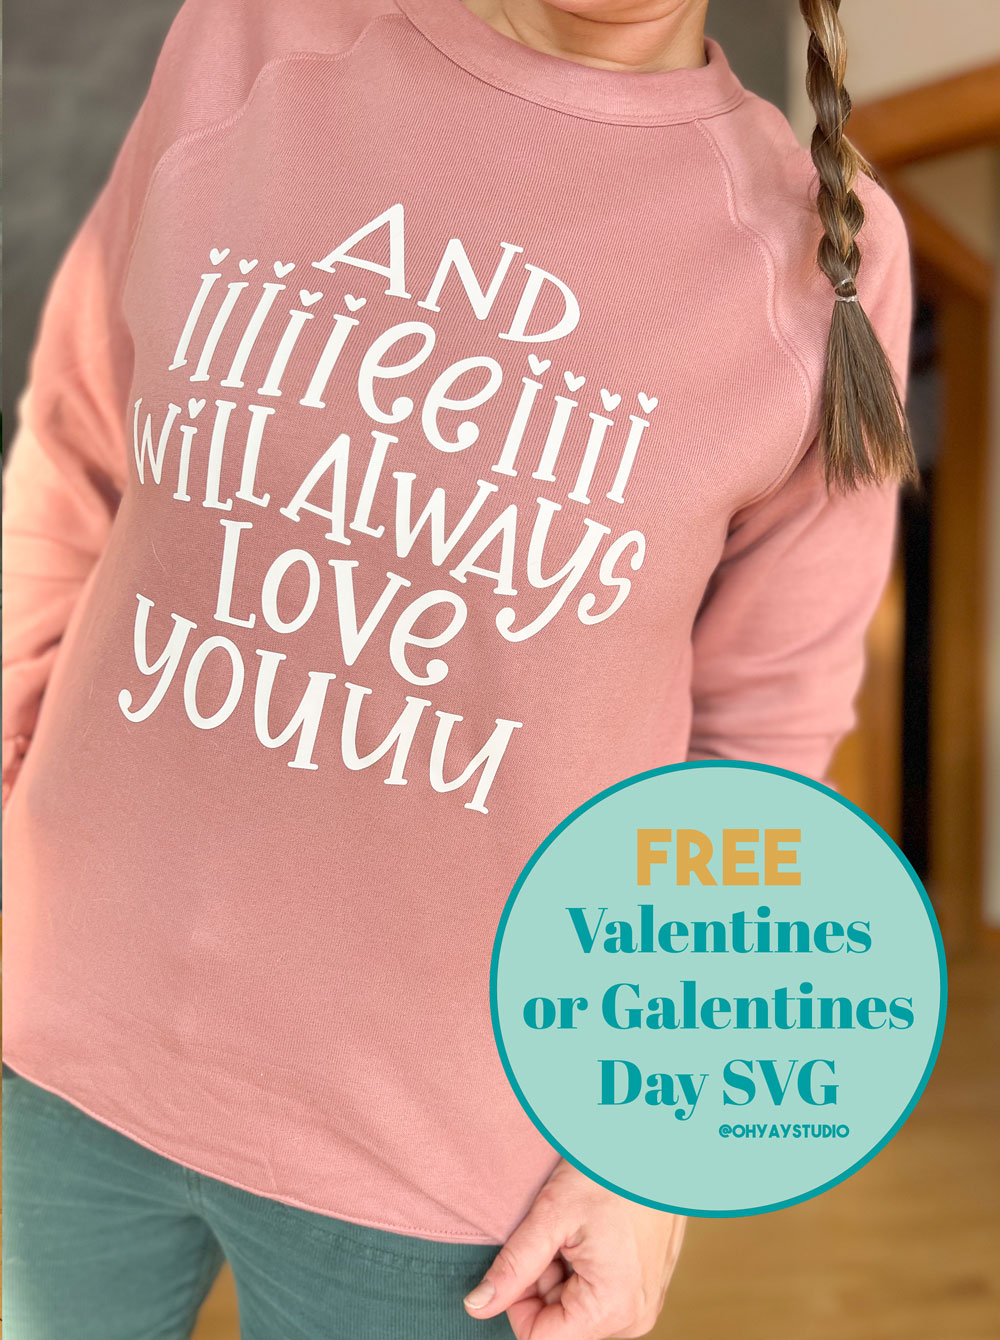 Whitney Houston valentines day SVG file, Whitney Houston SVG file, And I will always love you SVG file, free SVG file, free Valentines day SVG file